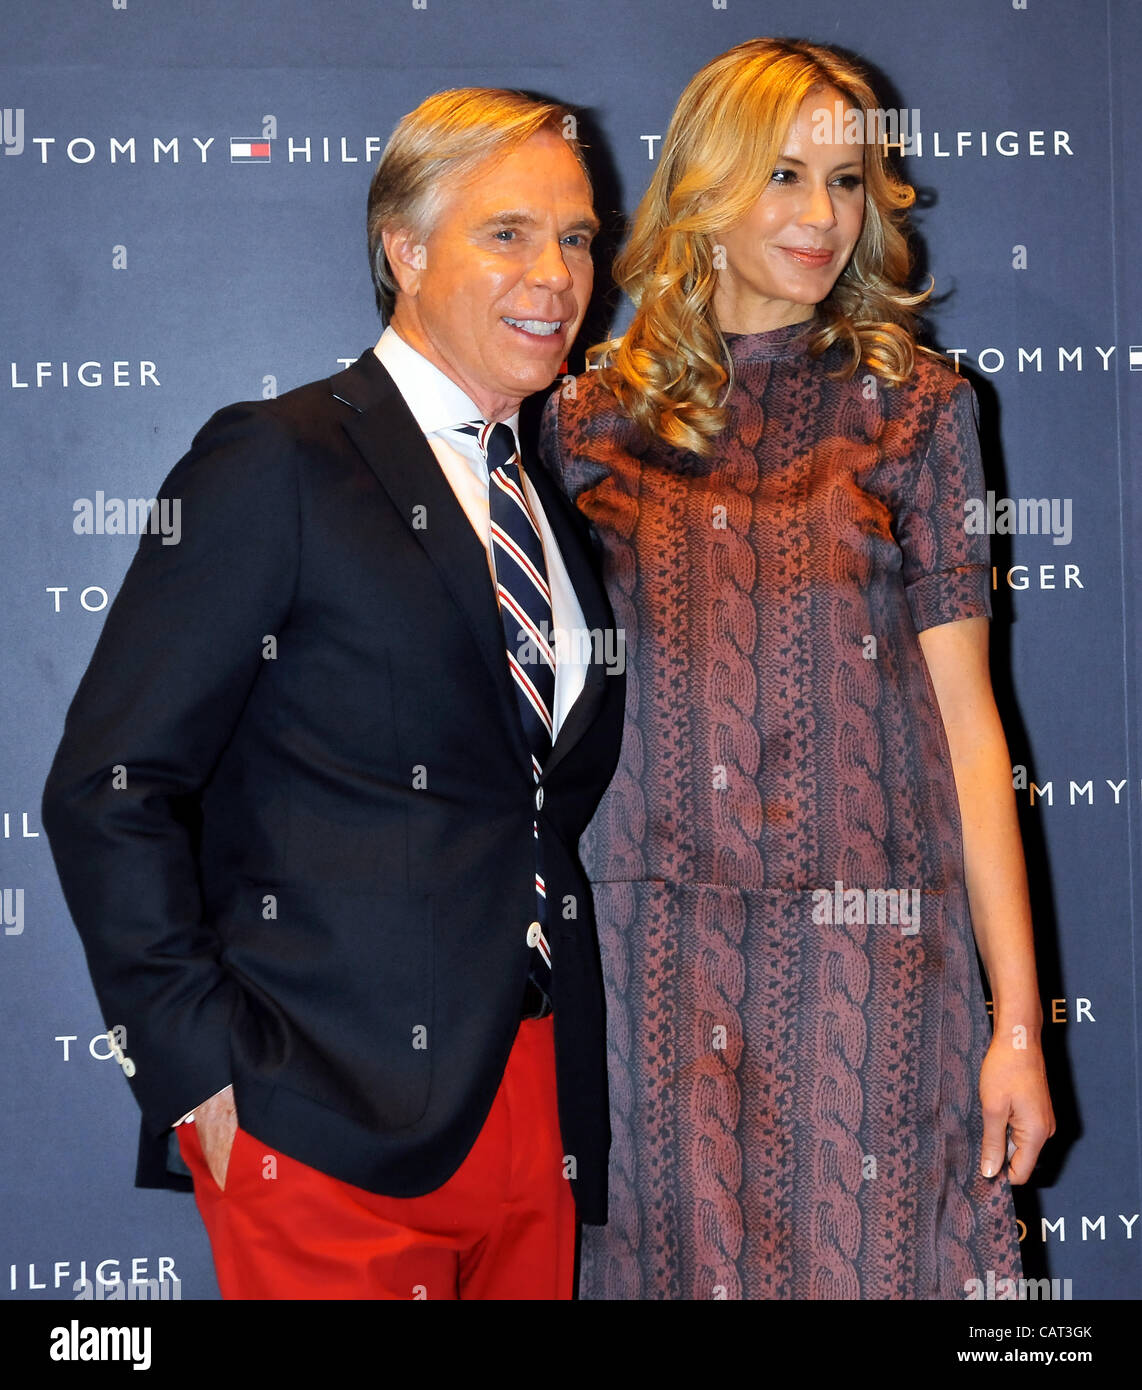 Tommy Hilfiger, Dee Hilfiger, Apr 16, 2012 : Fashion designer Tommy ...